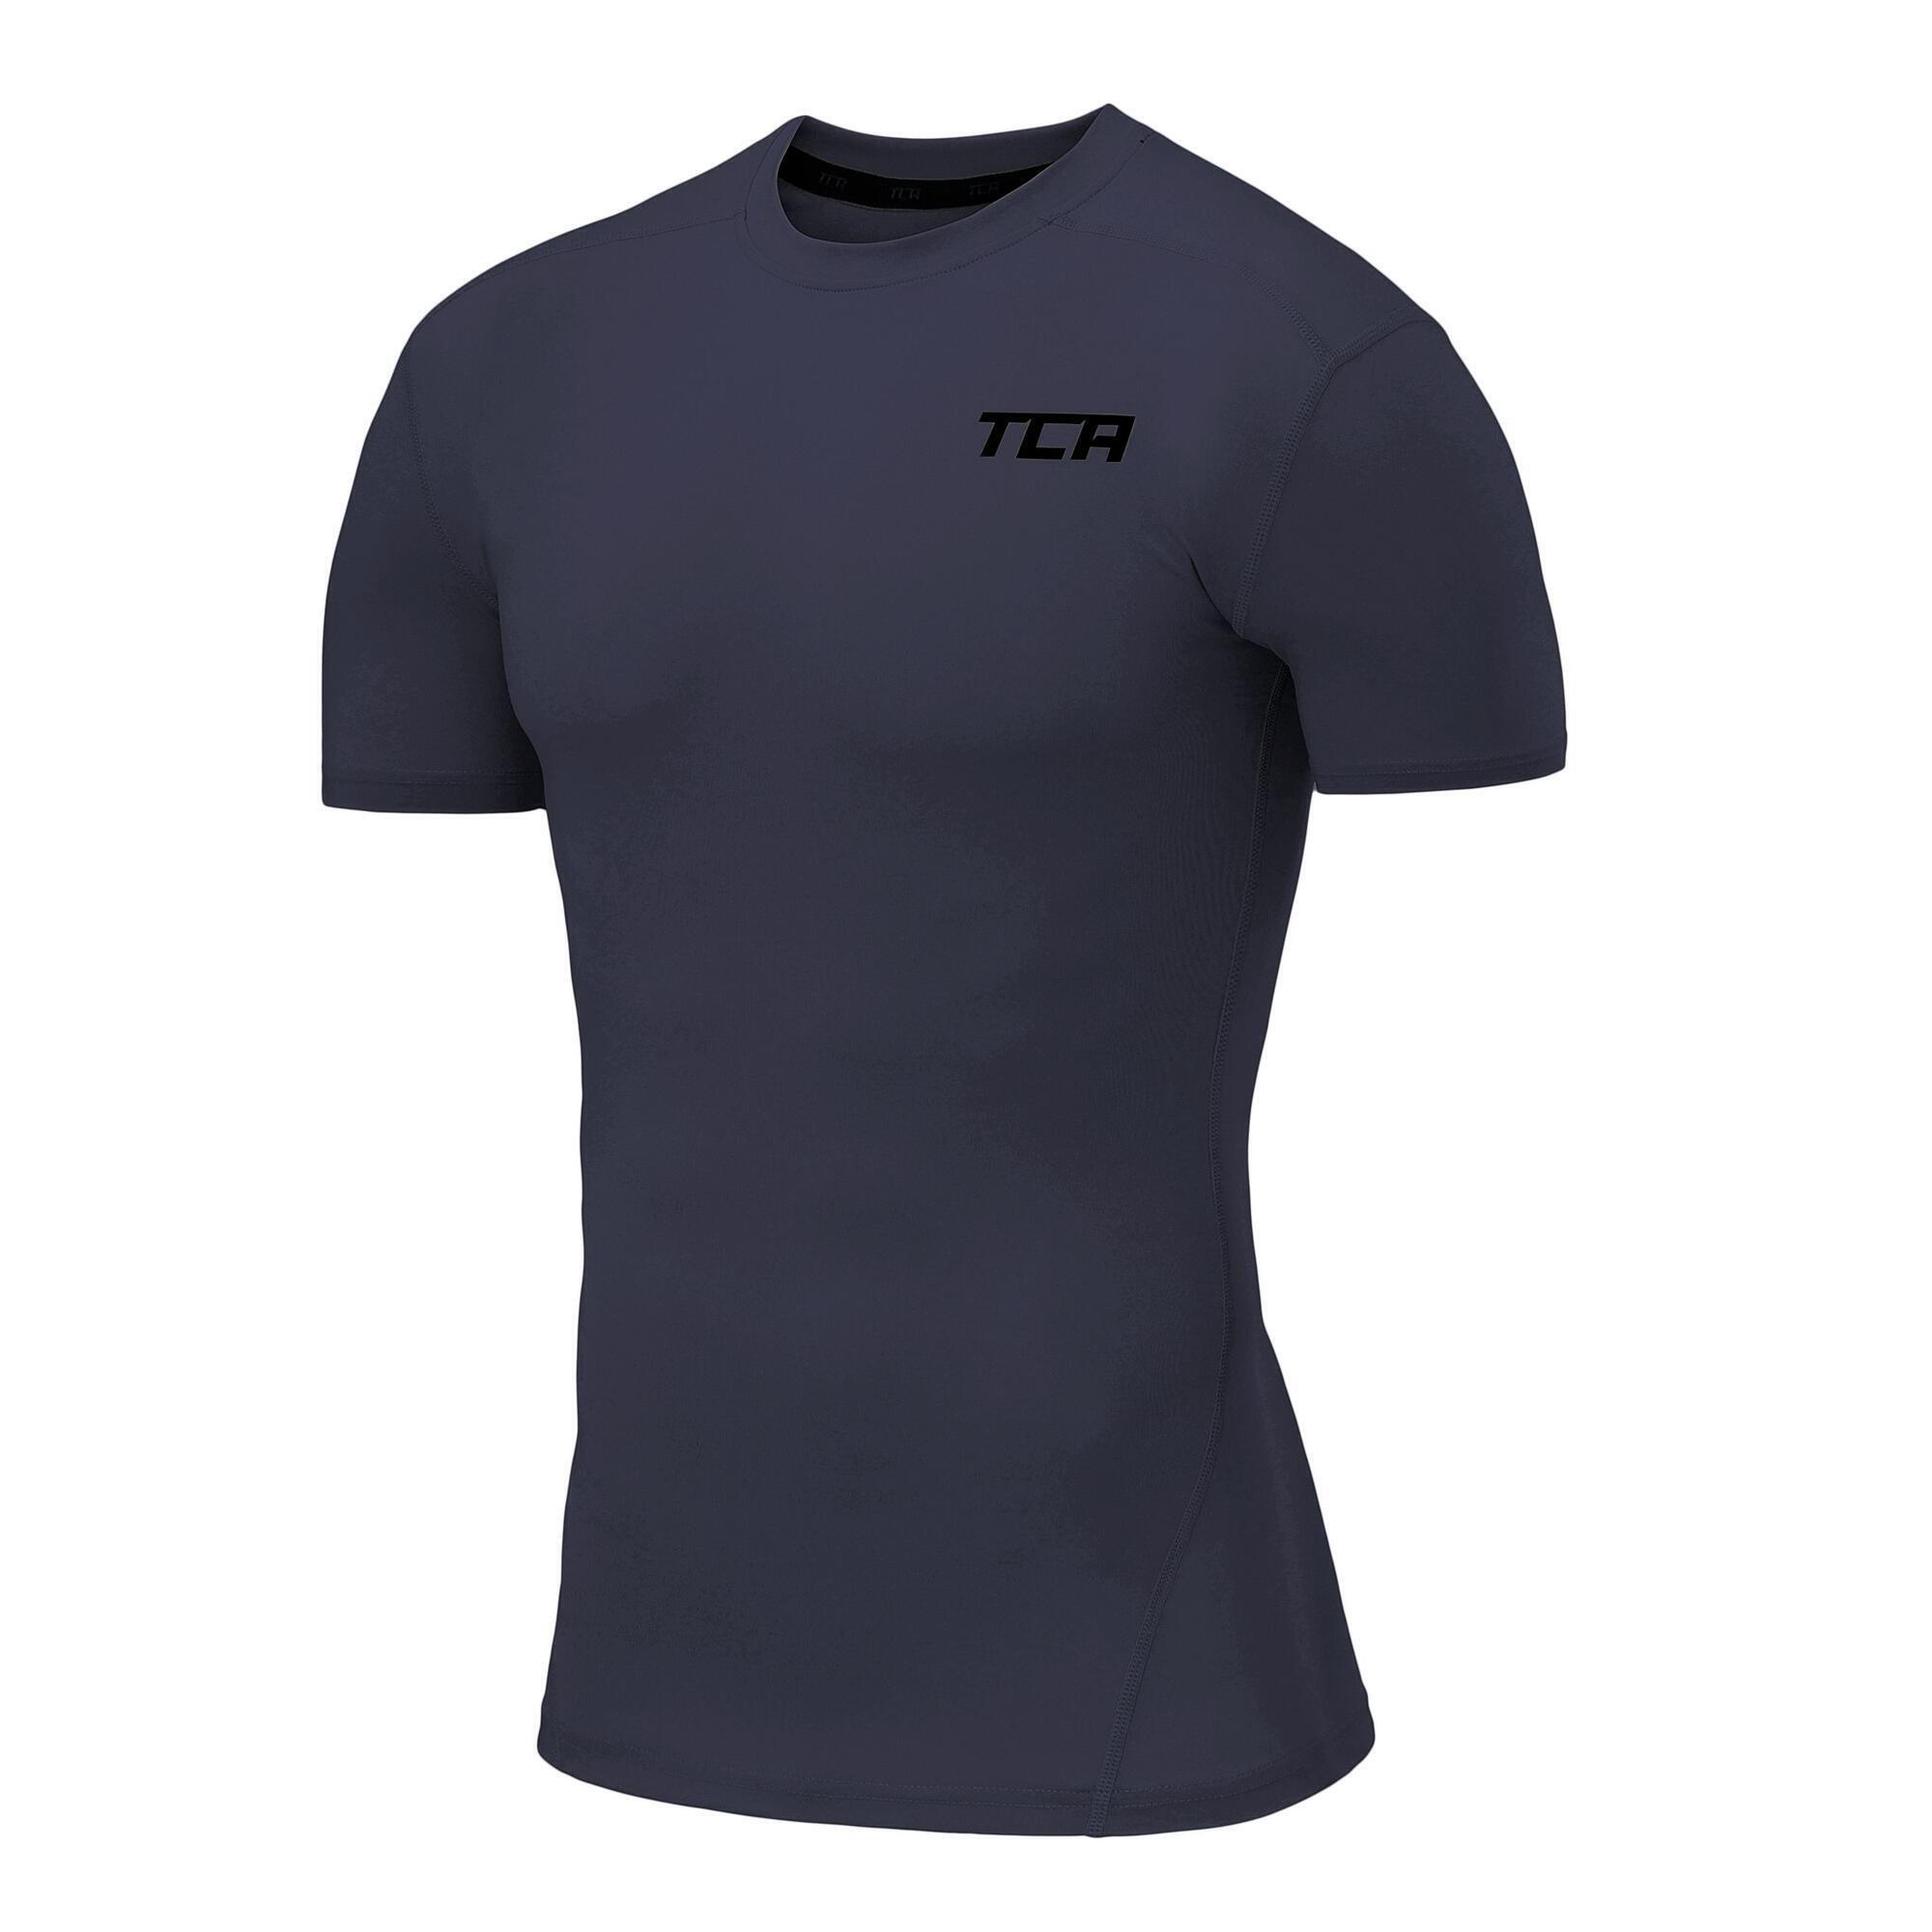 Men's Performance Base Layer Compression T-shirt - Graphite 1/4